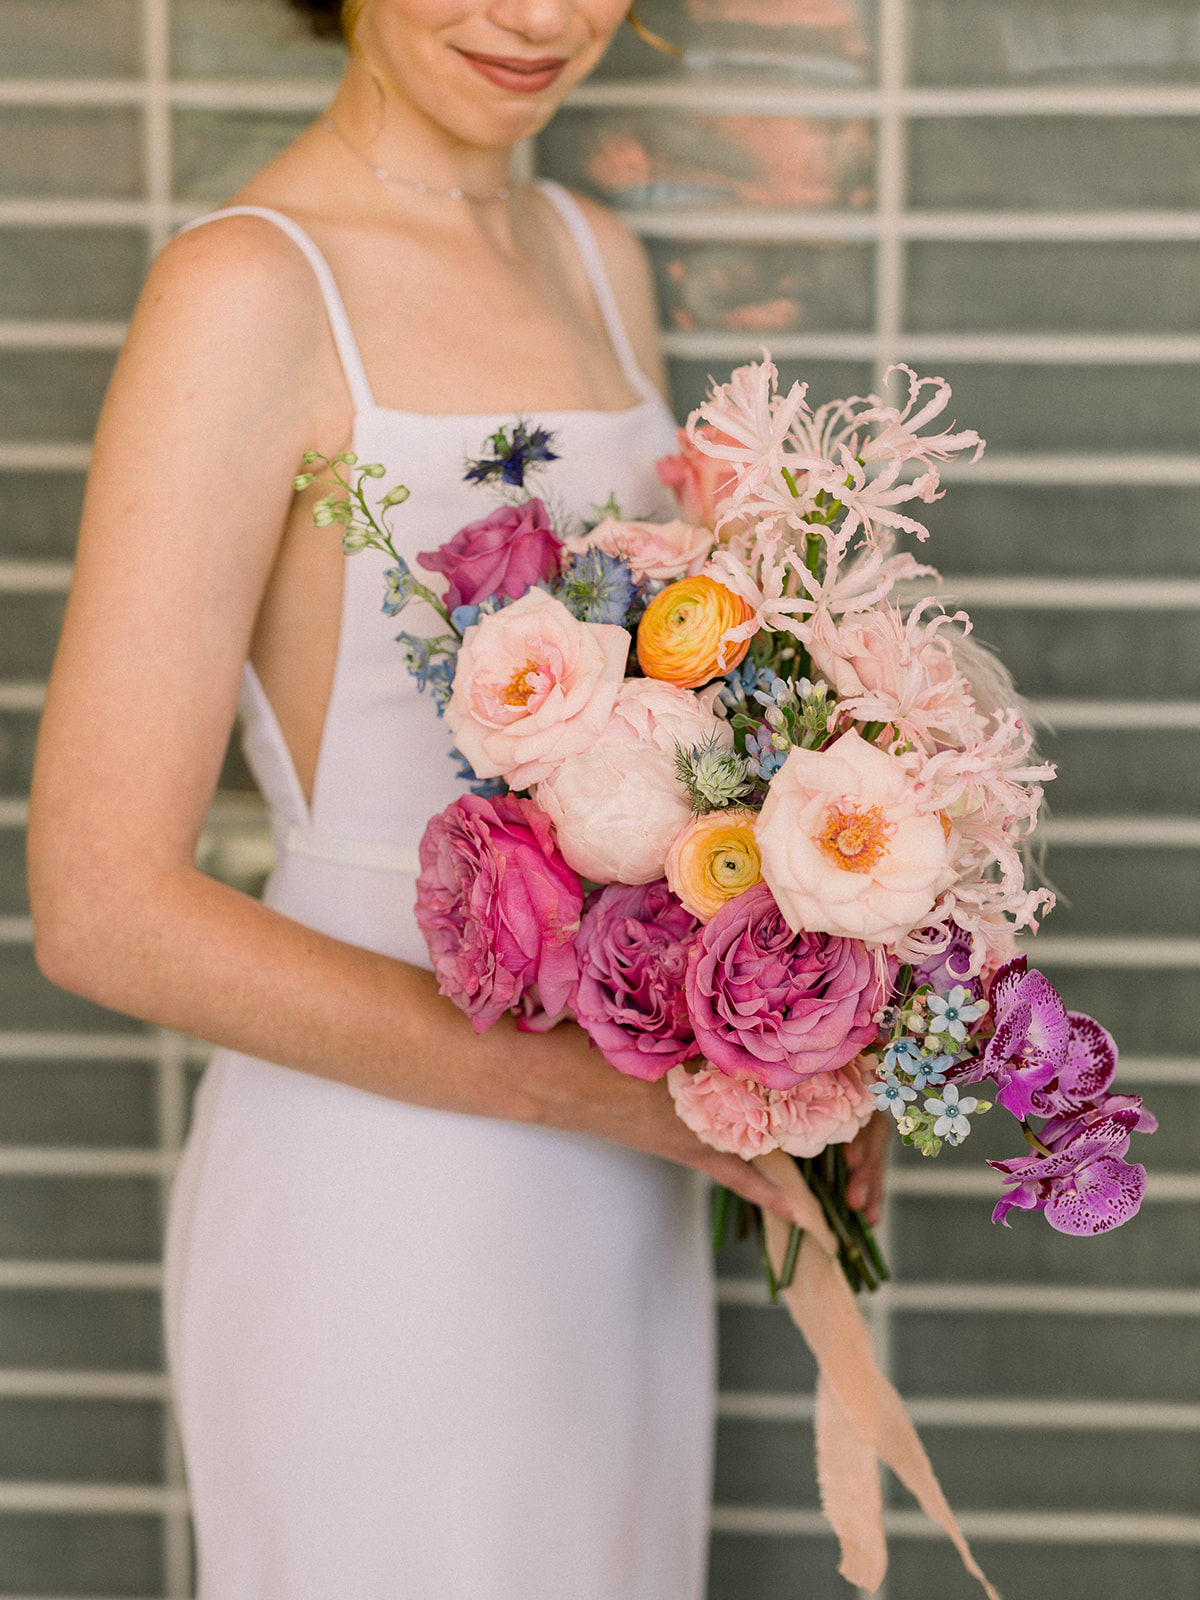 bride in contemporary spaghetti strap dress and low chignon bun with pastel floral bridal bouquet